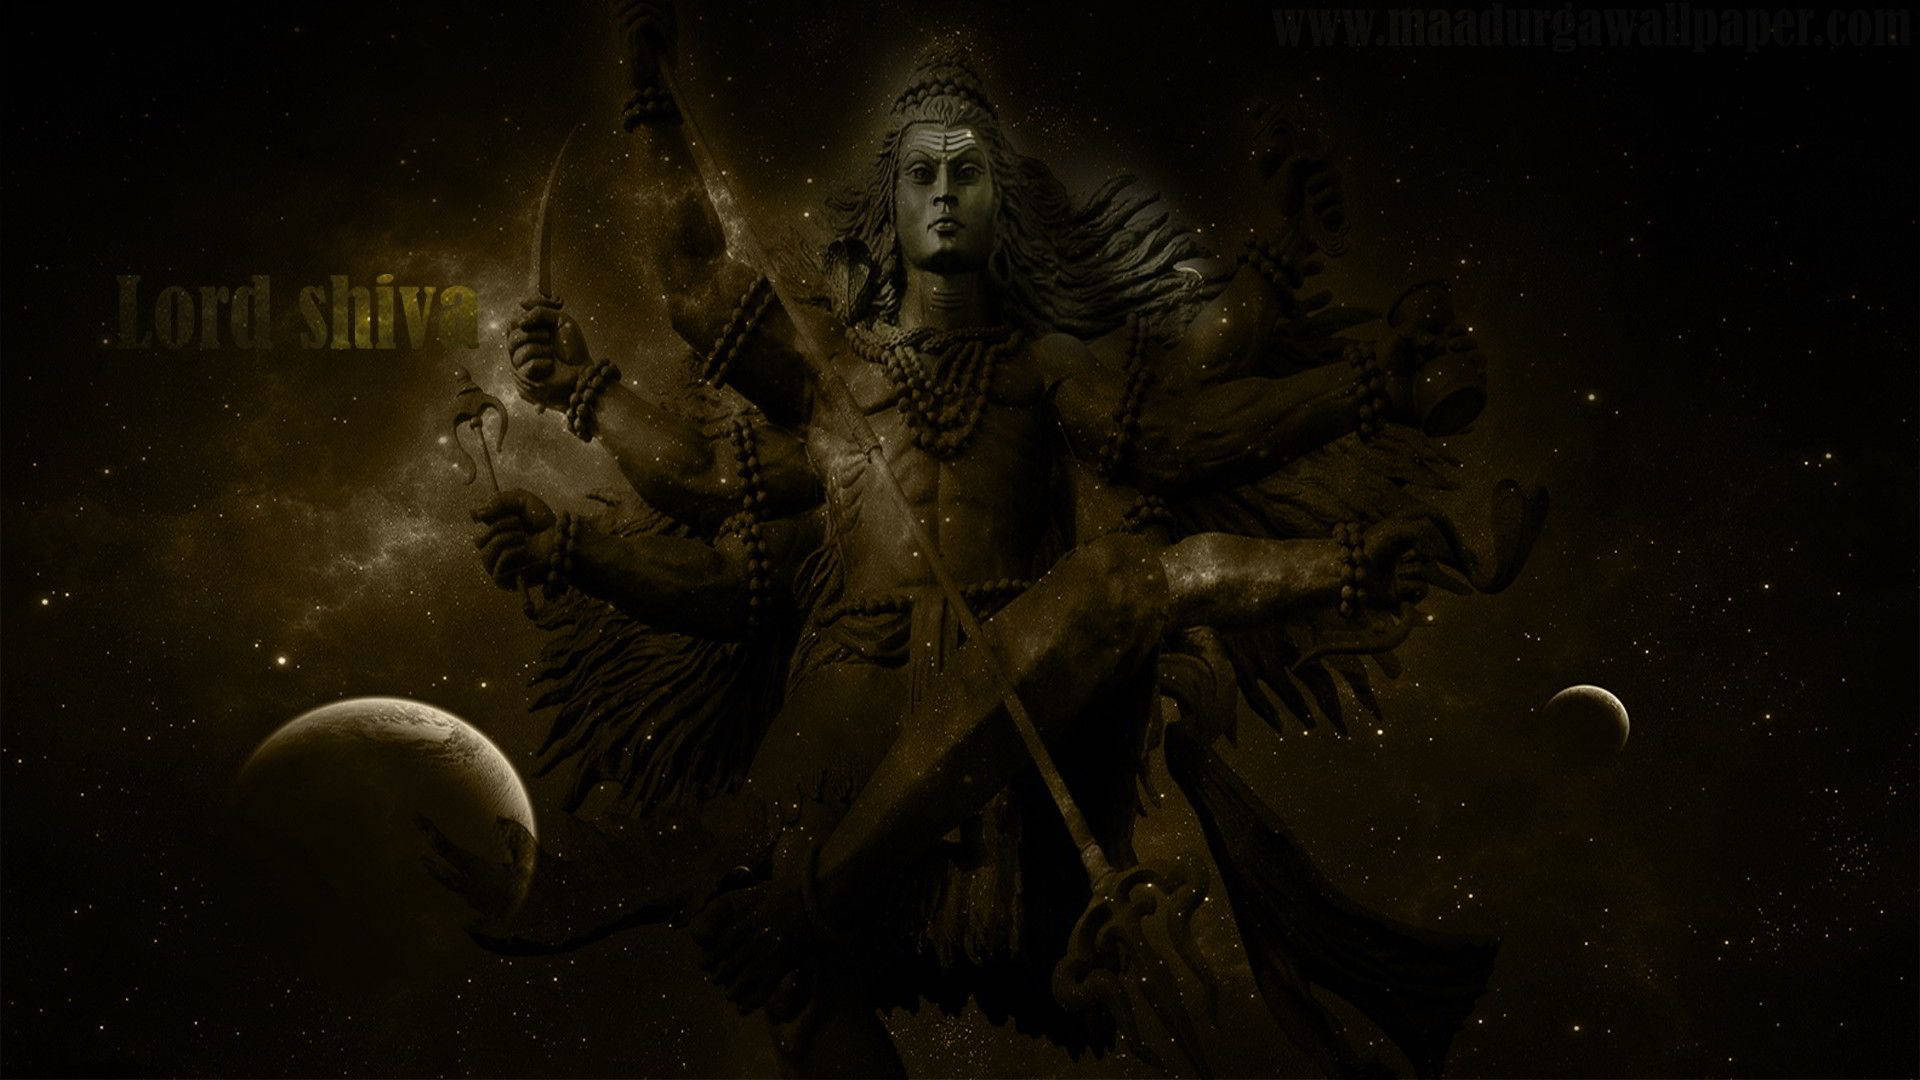 Free Shiva Black Wallpaper Downloads, [100+] Shiva Black Wallpapers for  FREE 